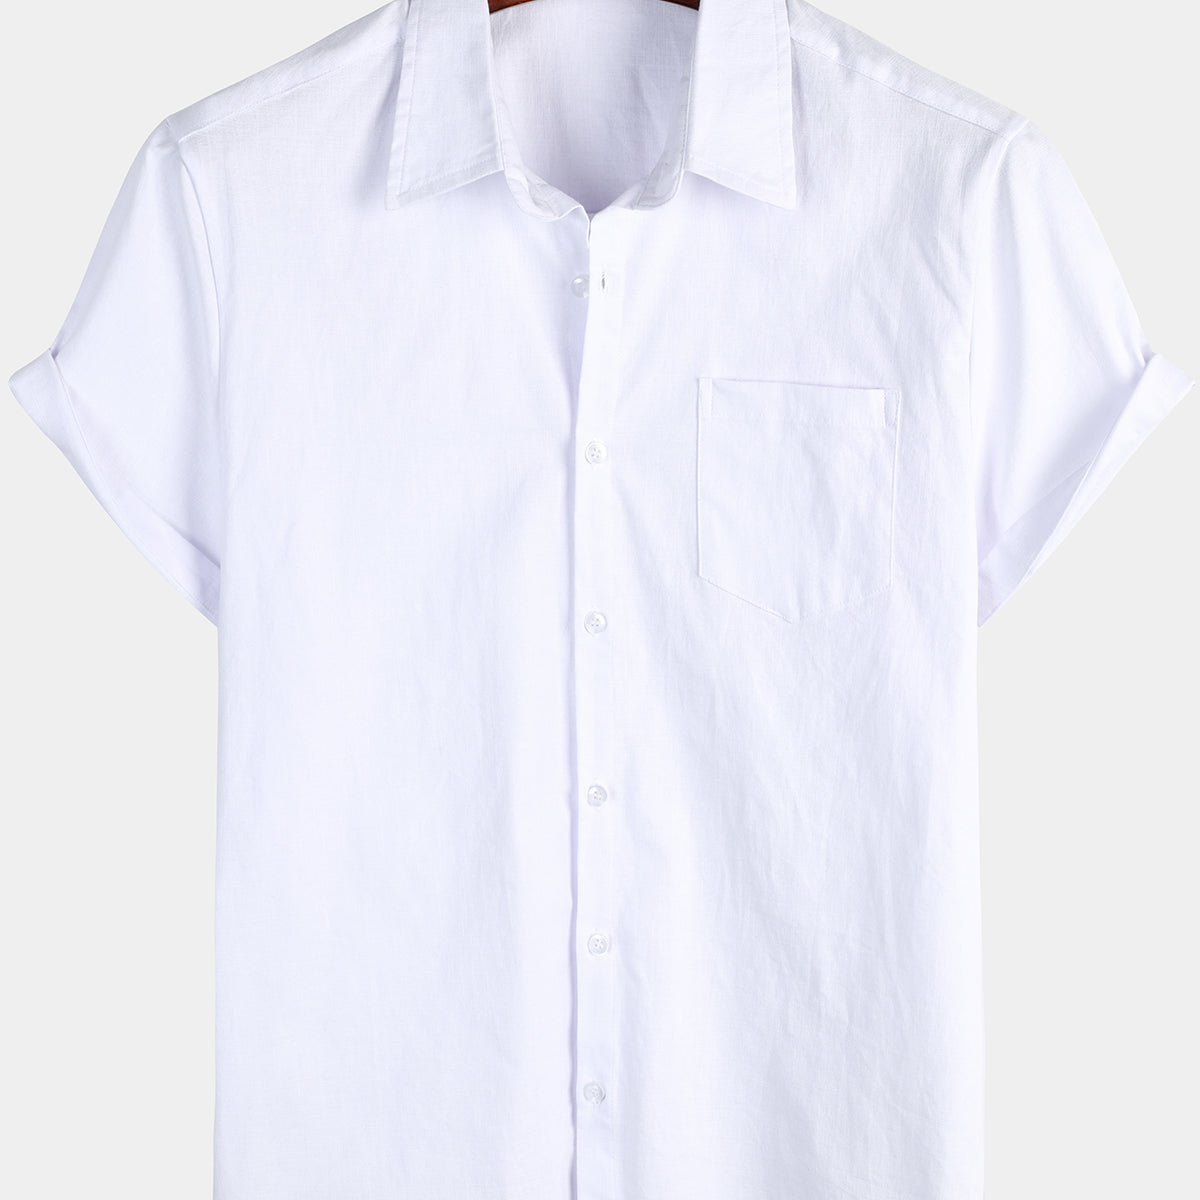 Men's Solid Color Linen Cotton Pocket Casual Button Short Sleeve Shirt